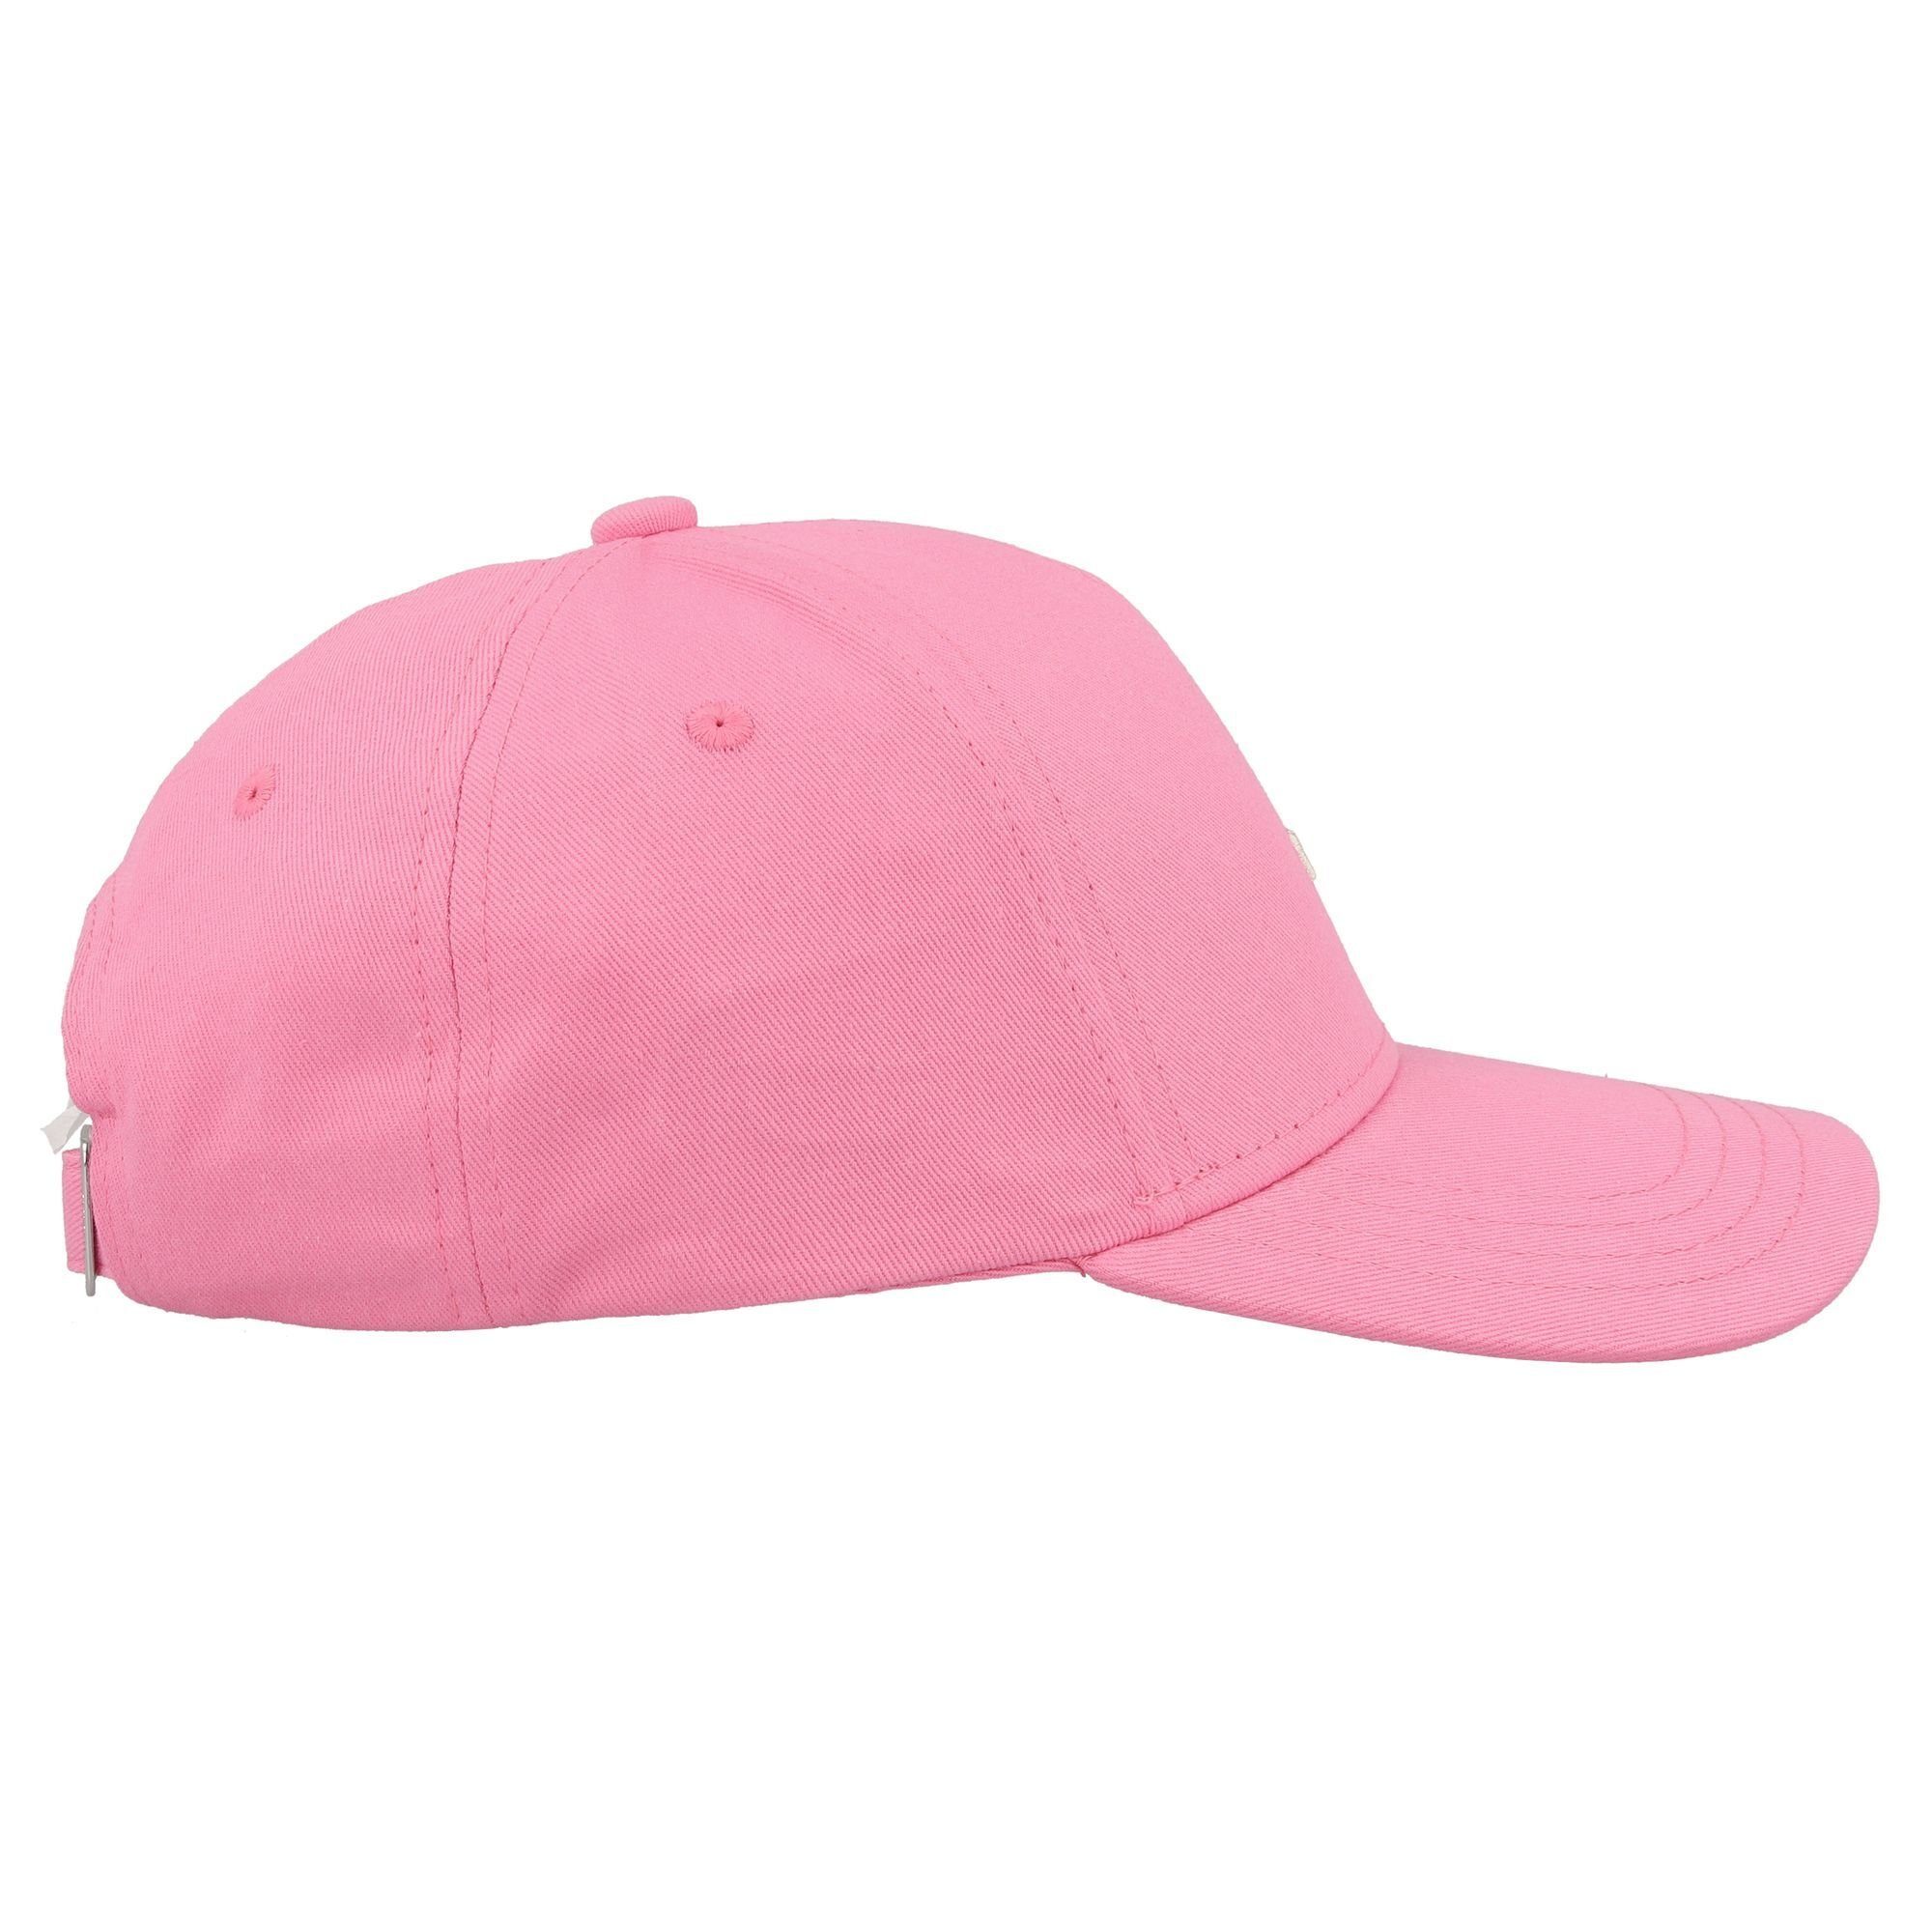 Baseball open HUGO pink Cara Cap